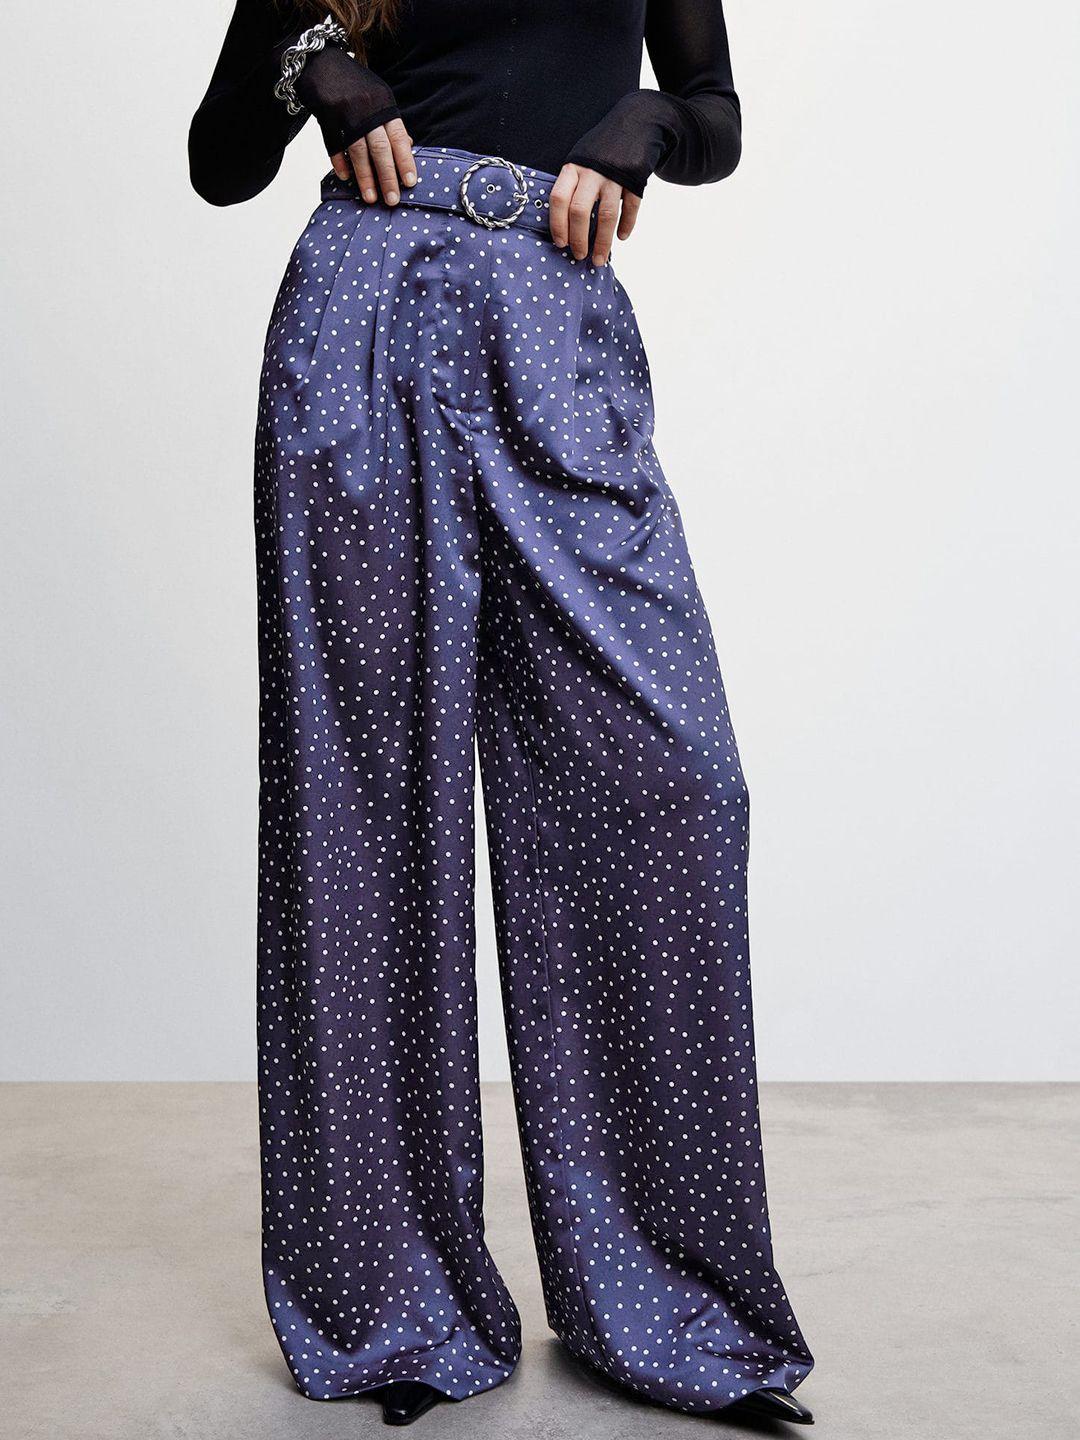 mango women navy blue polka dot printed high-rise trousers